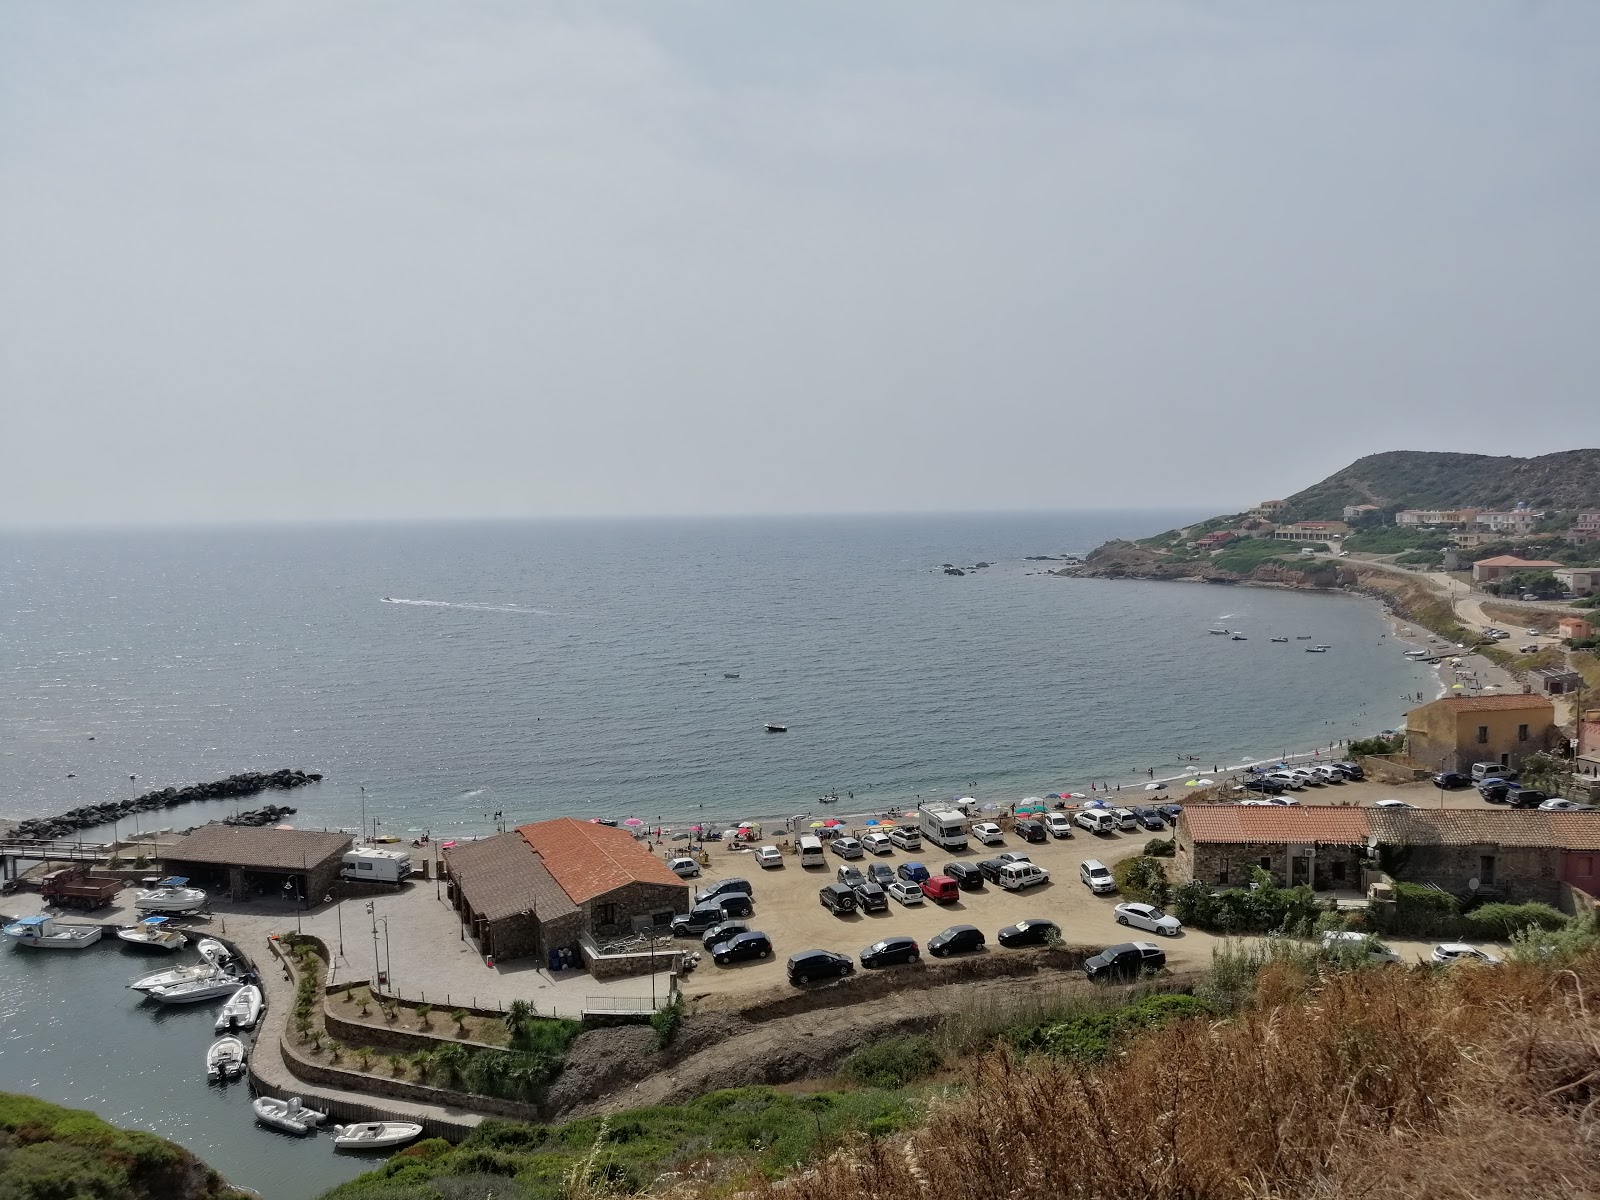 Zdjęcie Porto Palma beach i osada